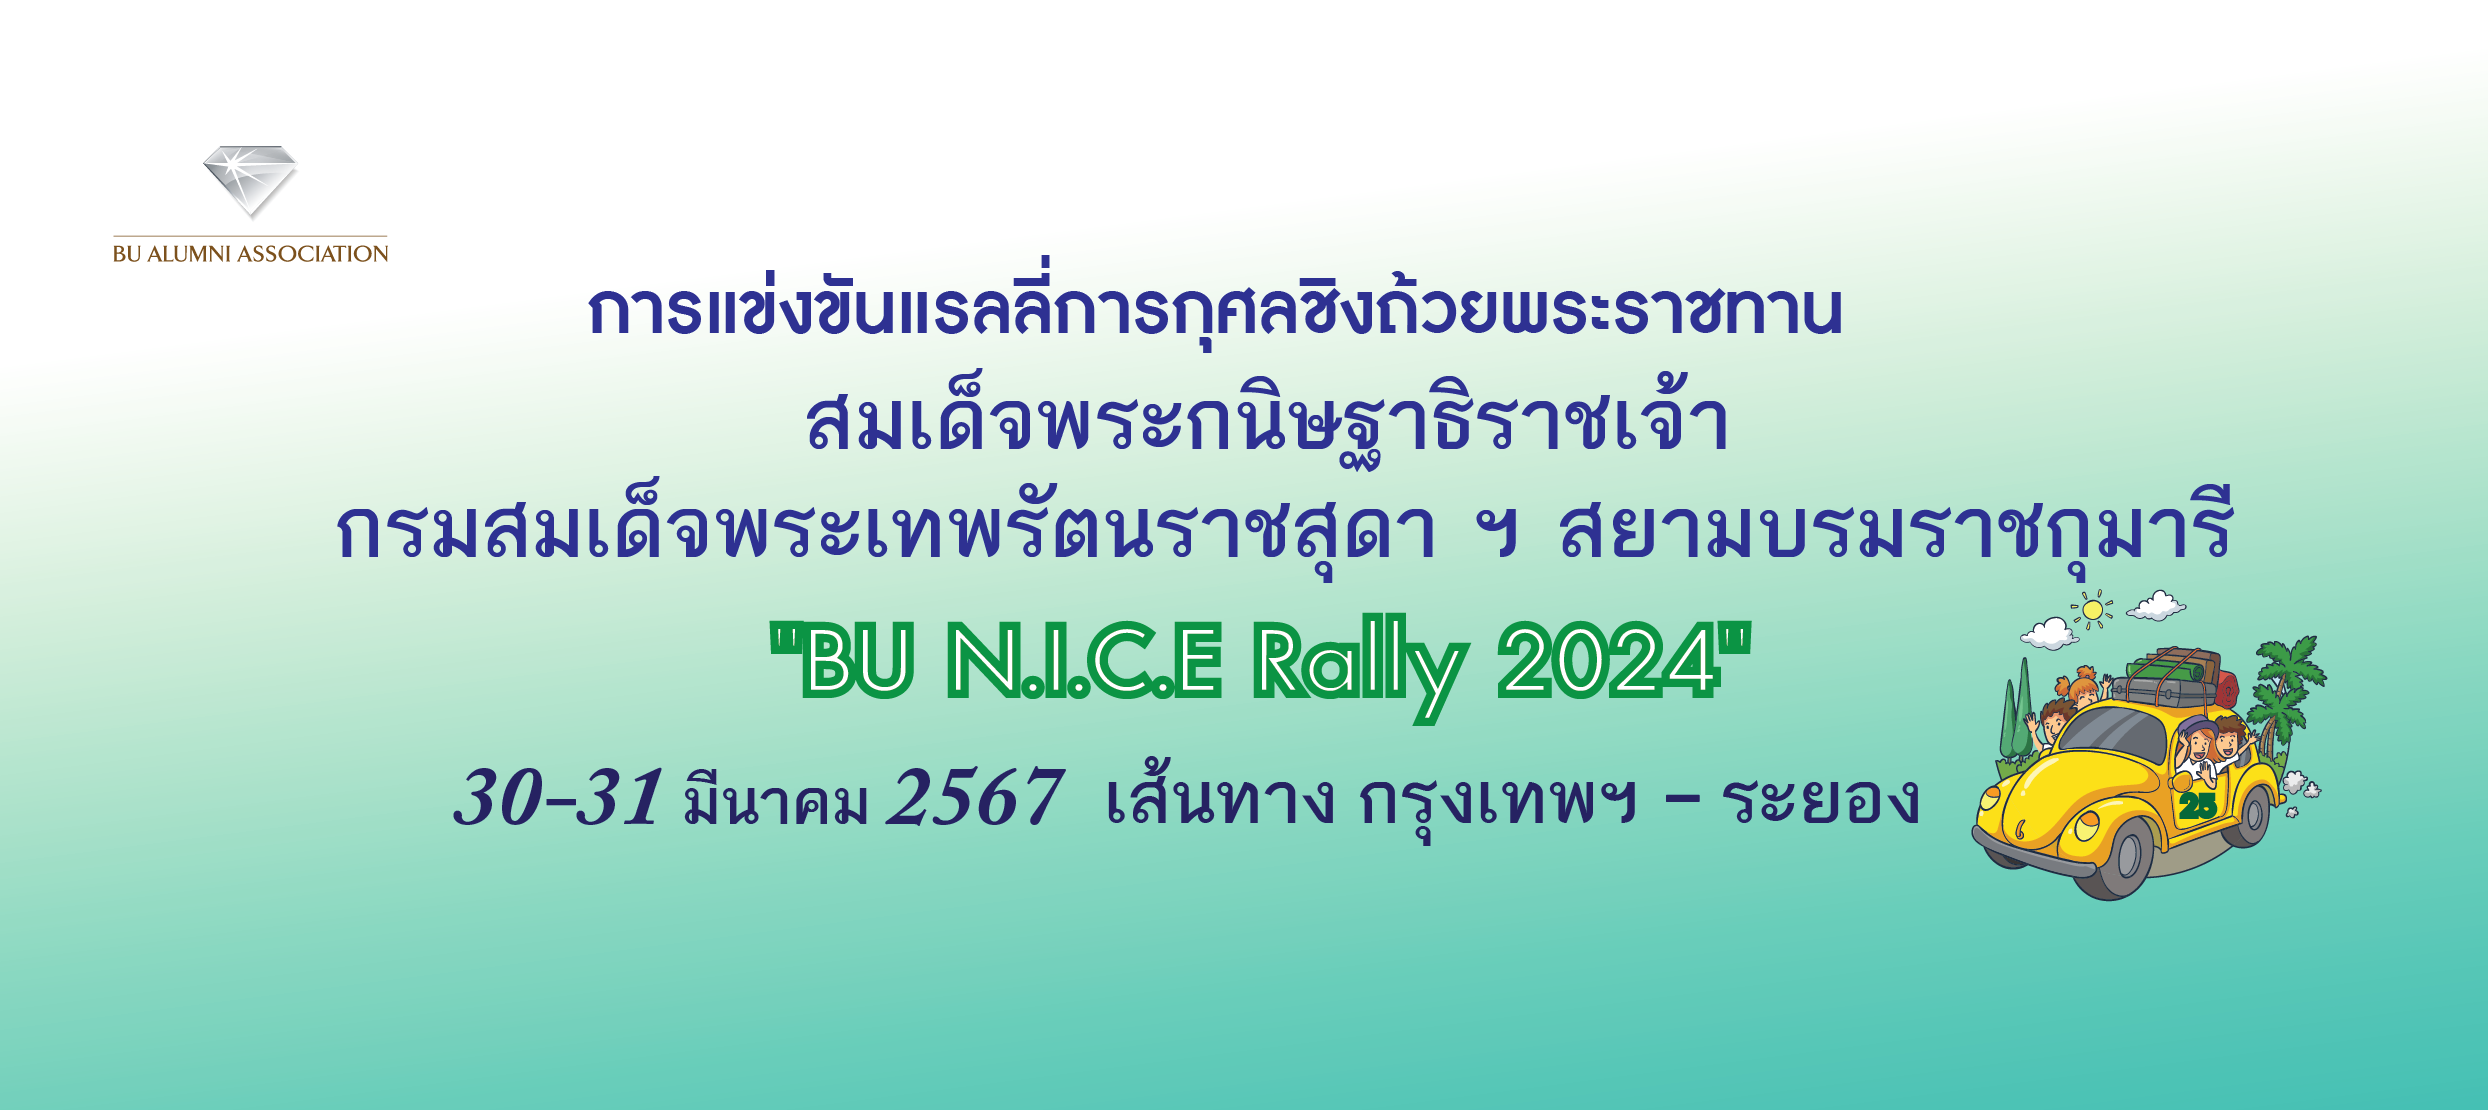 BU Alumni Rally 2024 